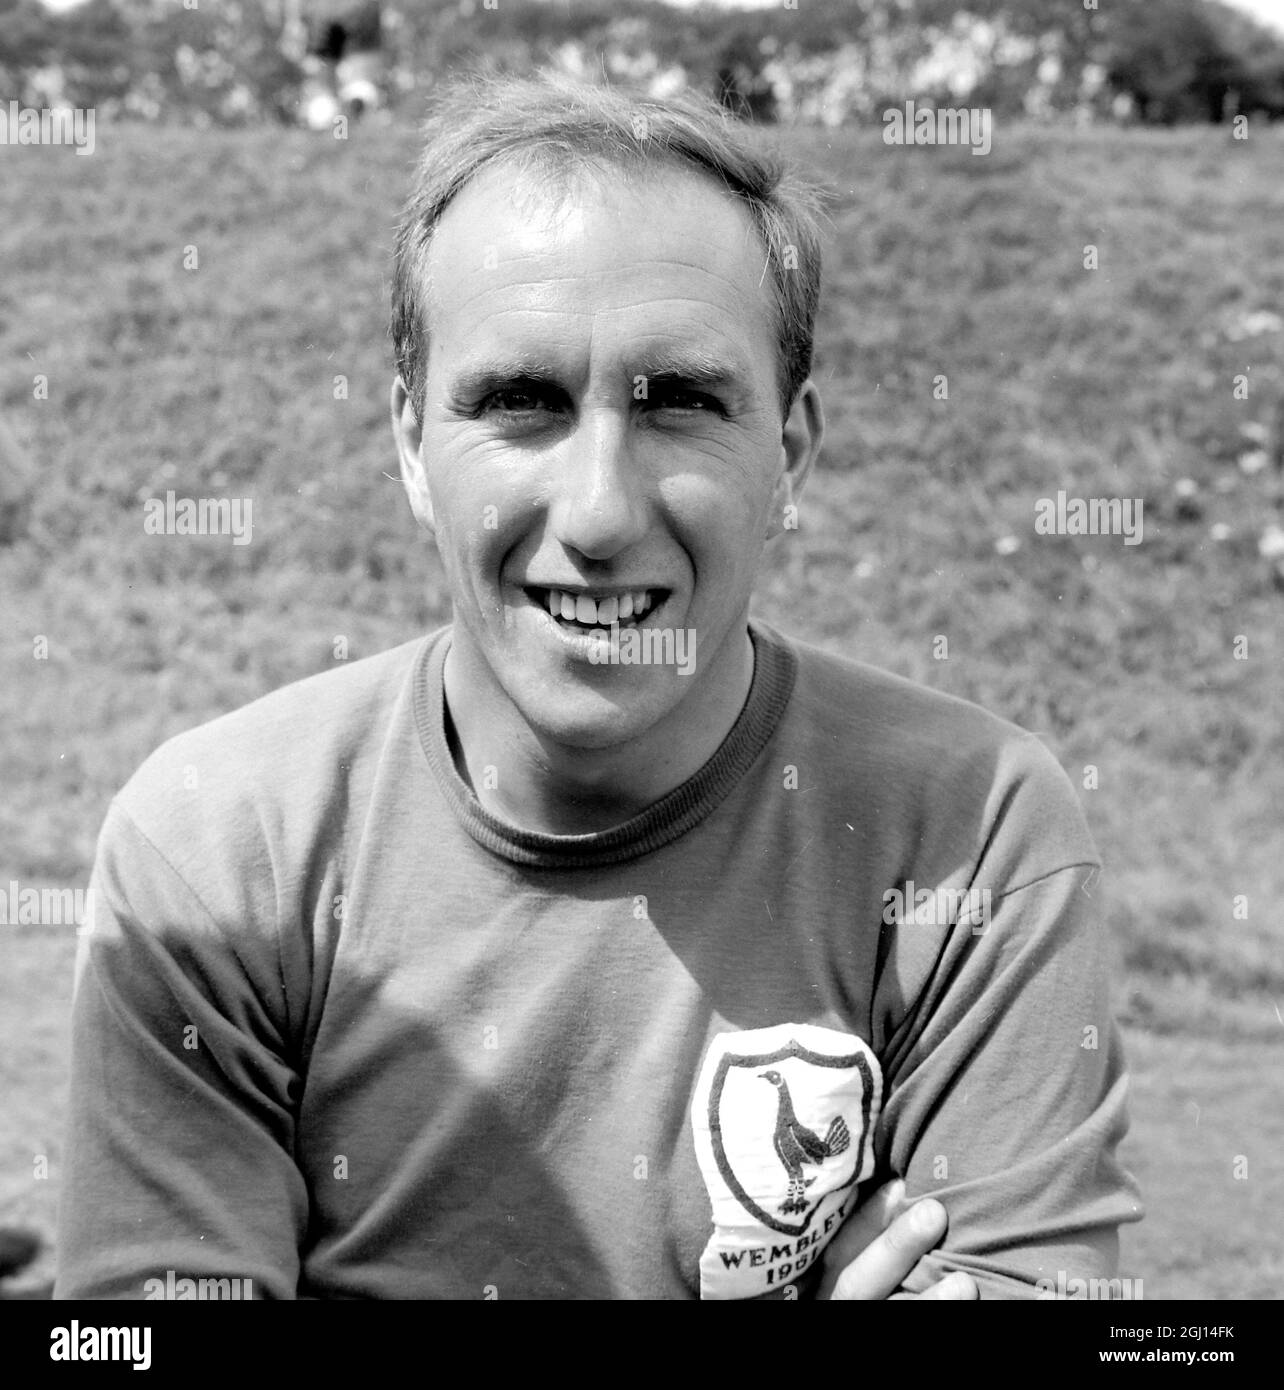 JOHN HOLLOWBREAD - PORTRAIT OF FOOTBALLER OF TOTTENHAM HOTSPUR SPURS FC FOOTBALL CLUB TEAM - ; 8 AUGUST 1962 Stock Photo